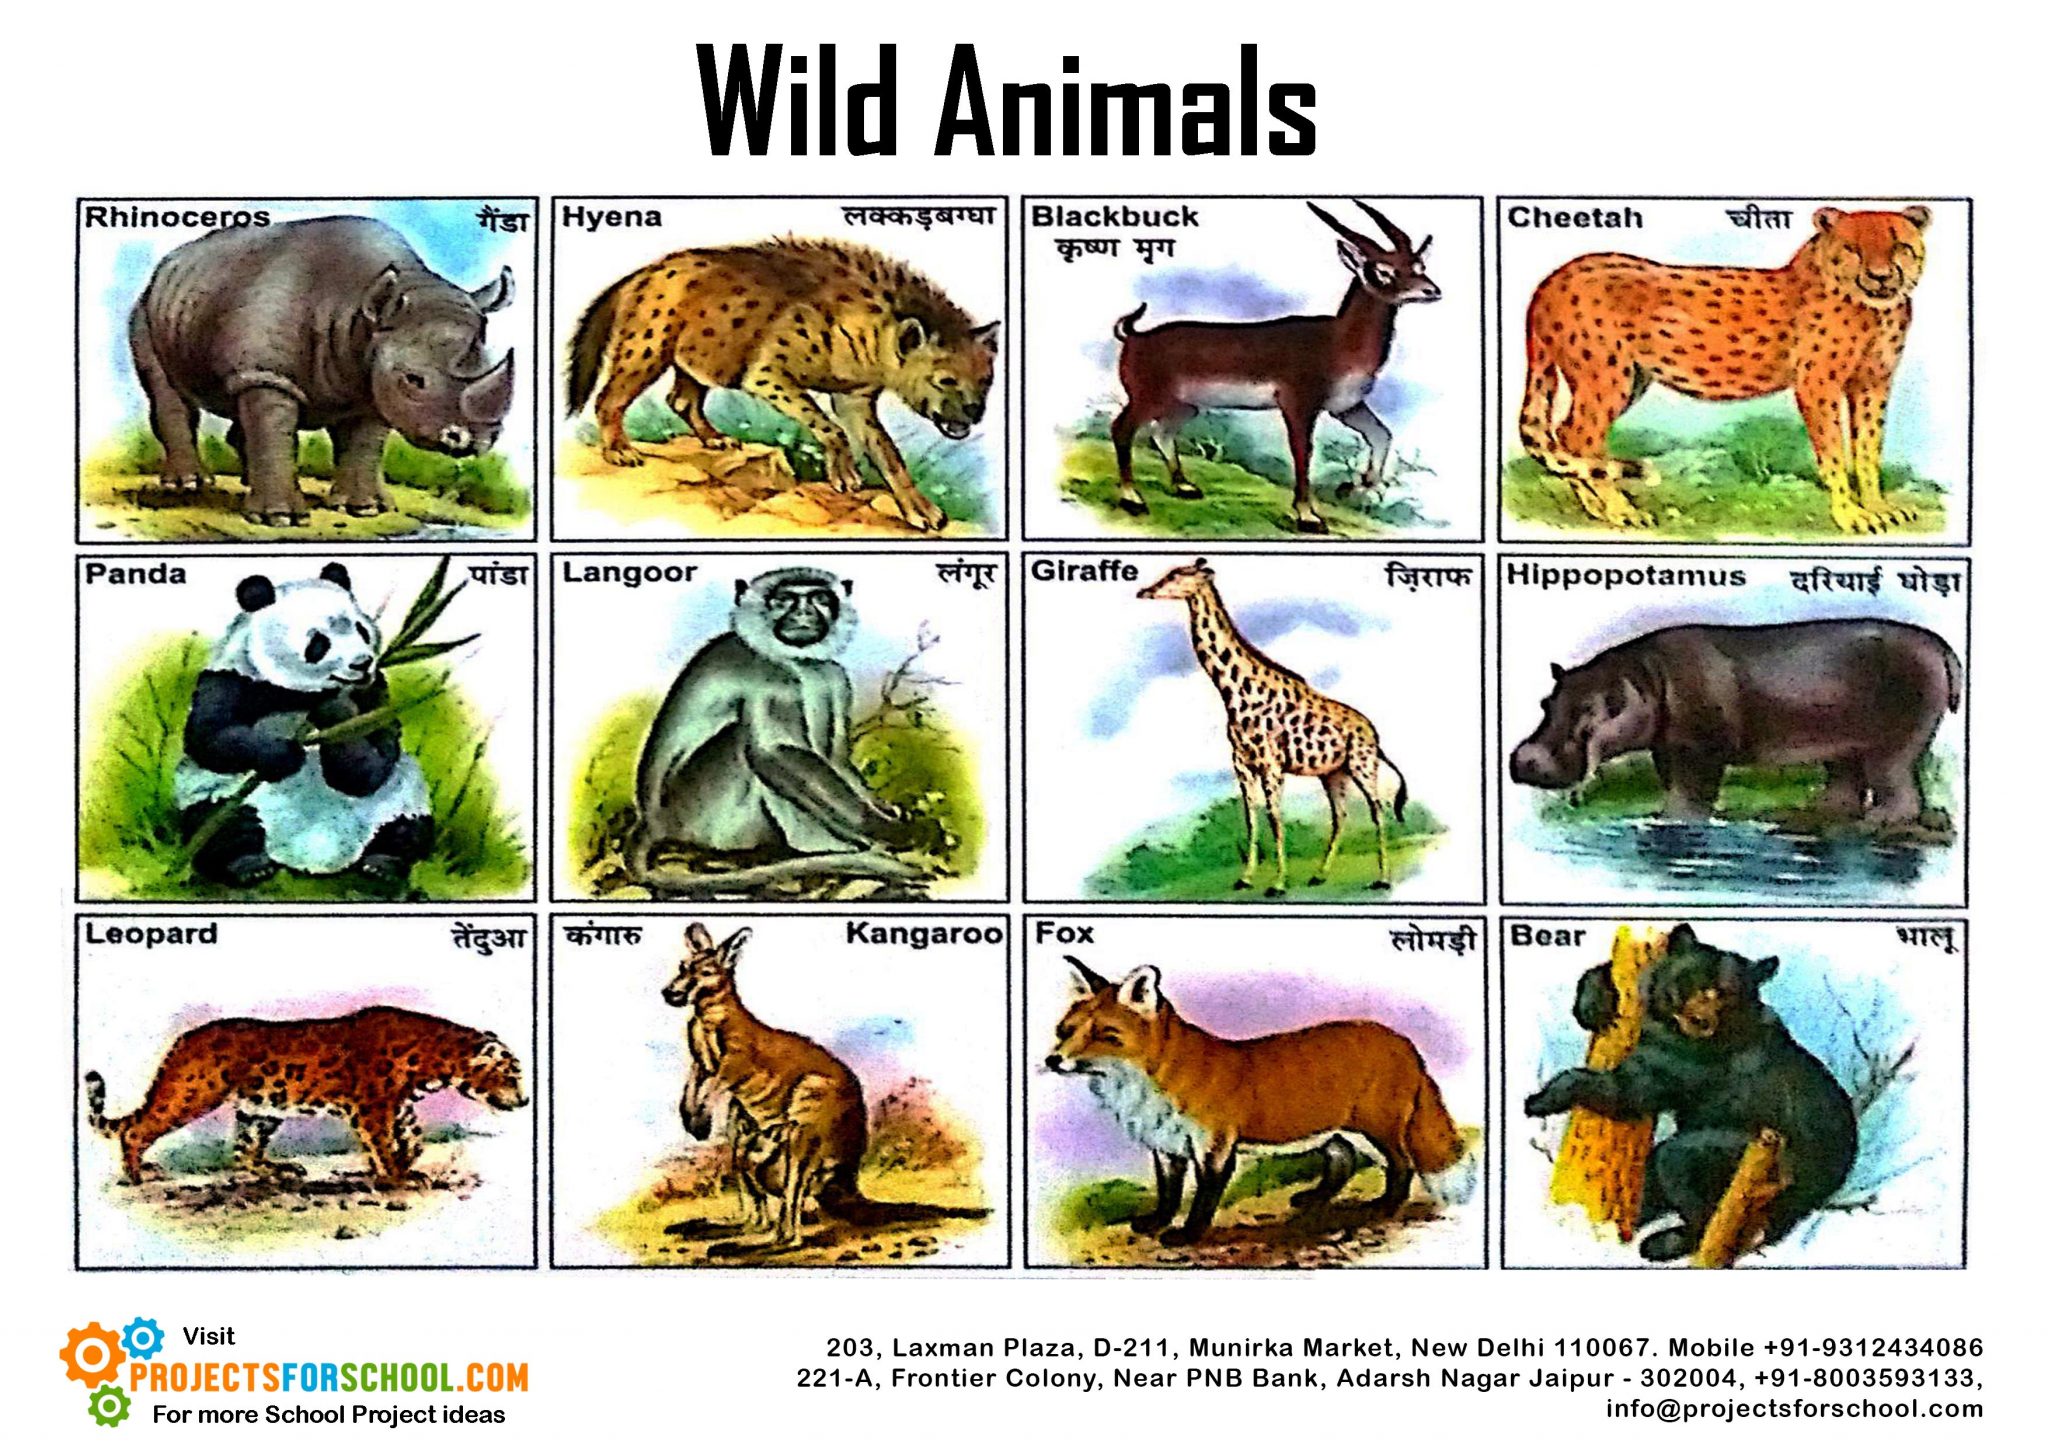 Wild animals as pets essay. A Wild animal проект. Wild animals and domestic animals. Animals презентация. Domestic animals Wild animals список.